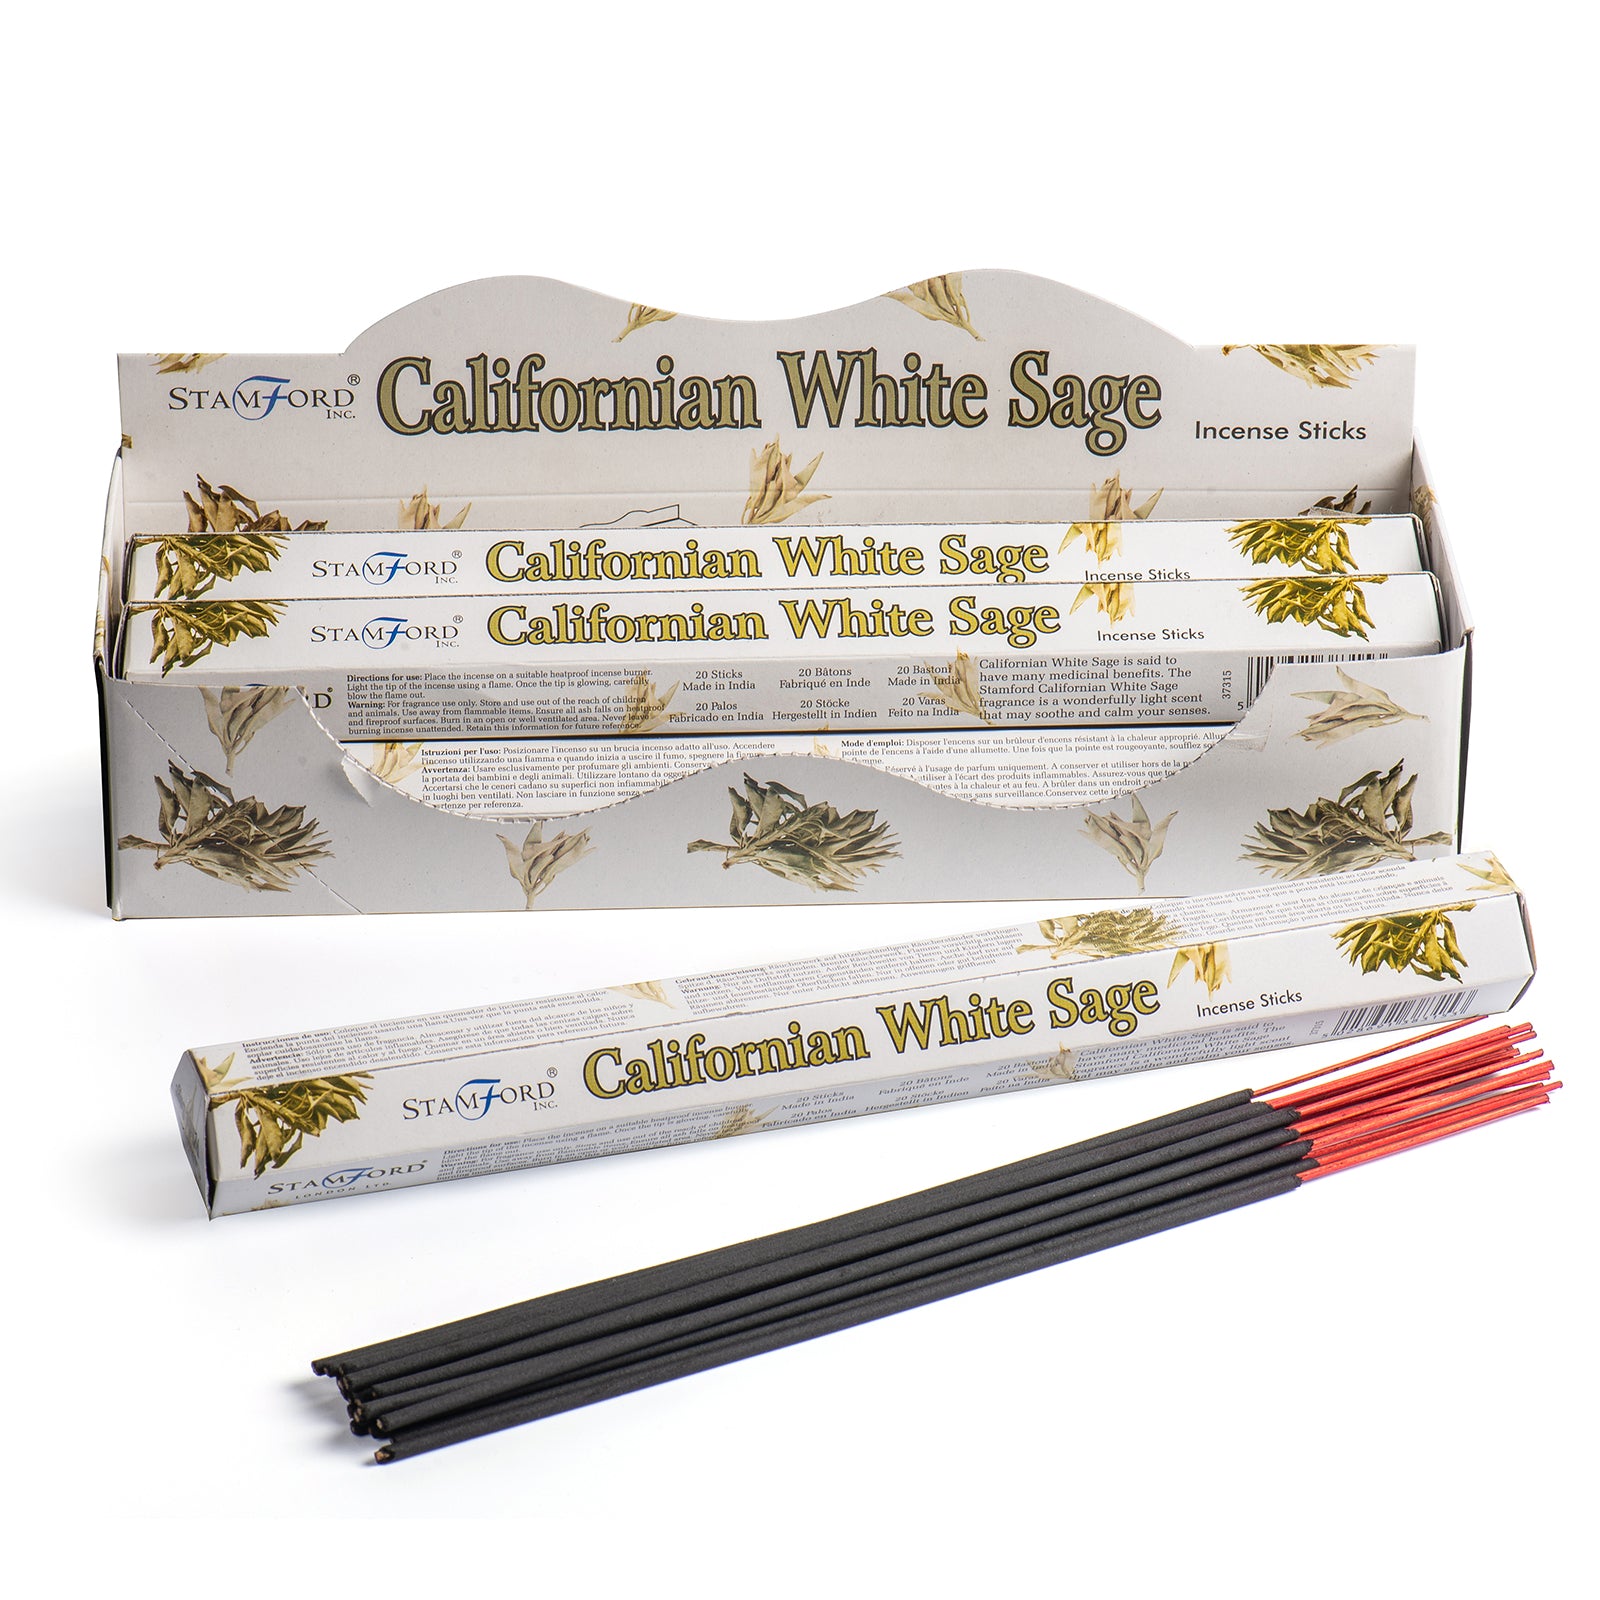 View Californian White Sage Premium Incense information